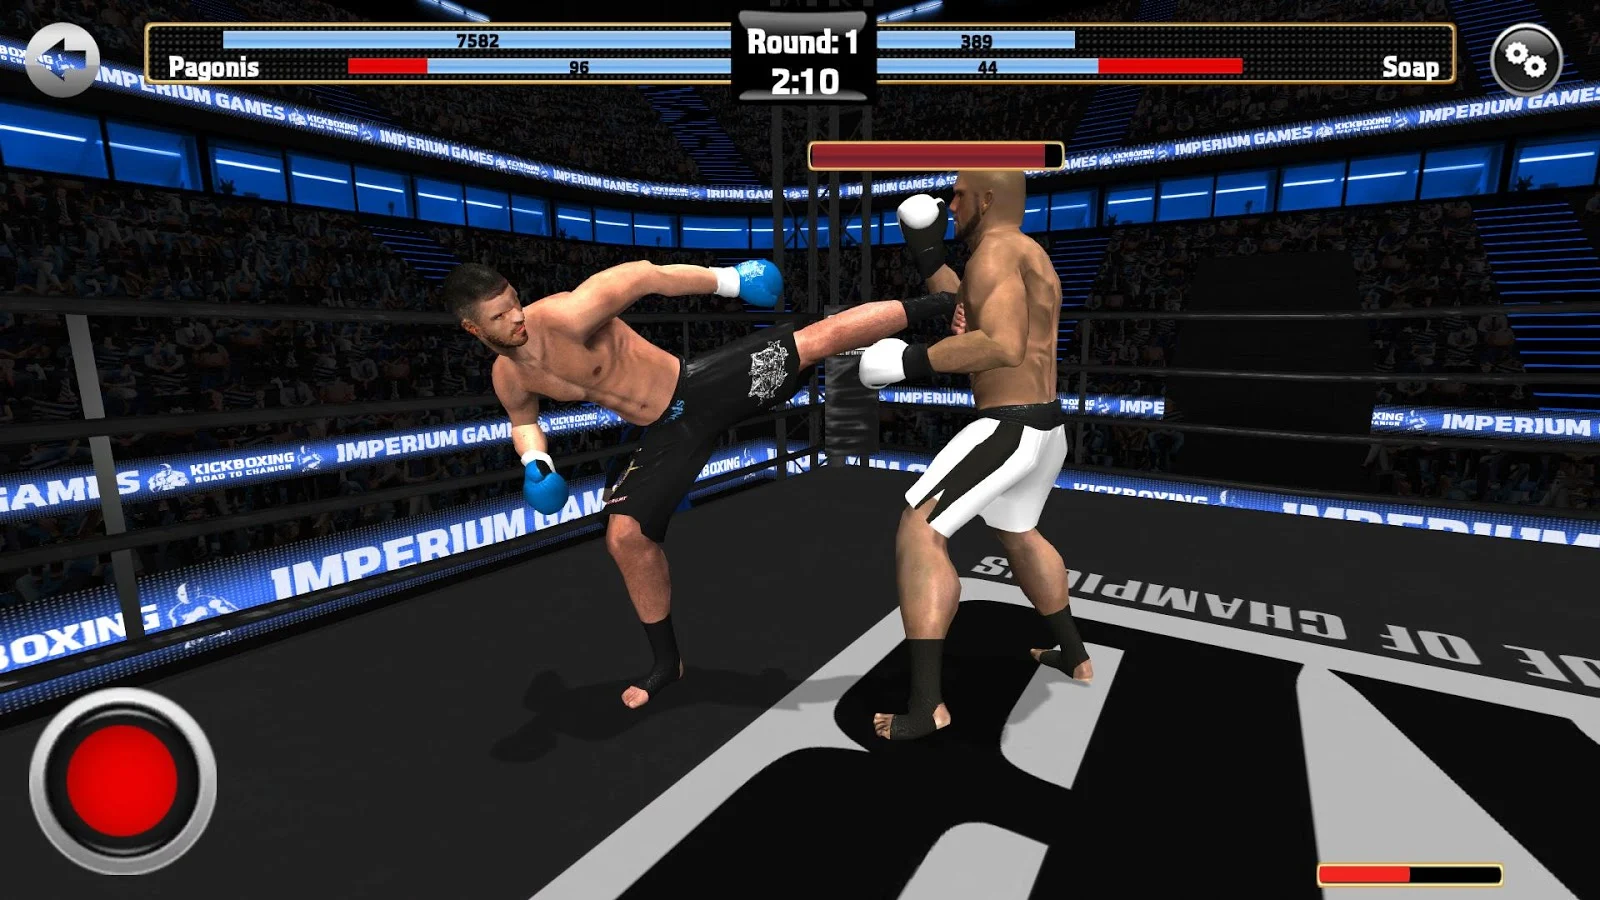  Kickboxing Road To Champion P: captura de tela 